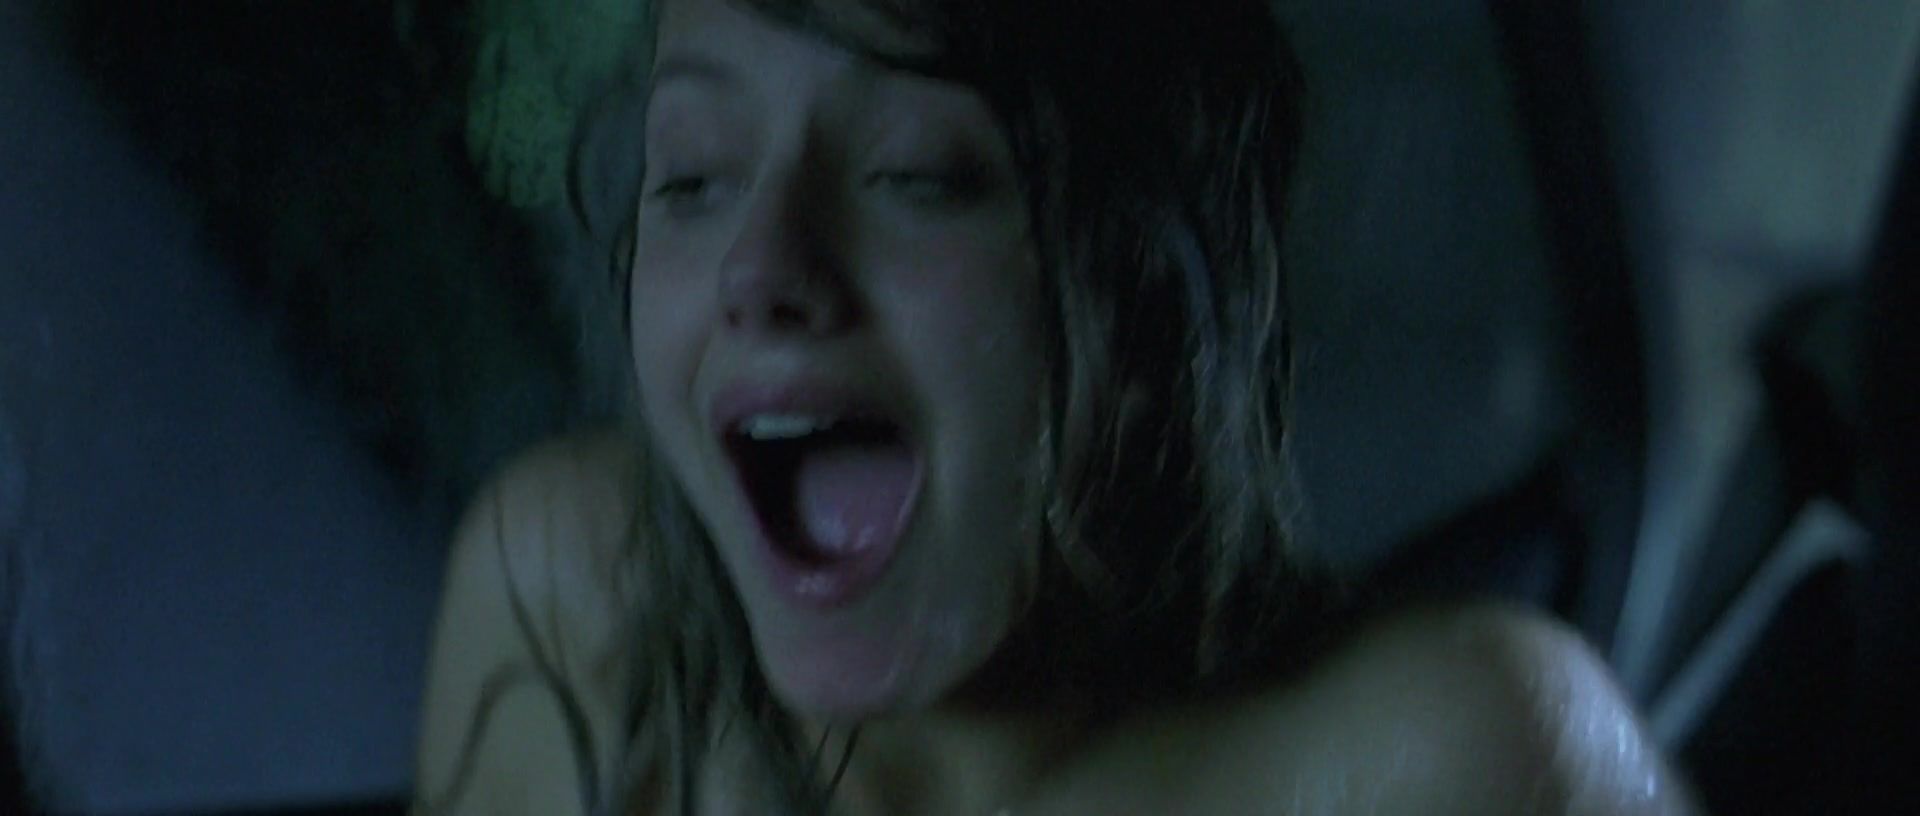 Parties Naked Melanie Laurent from French movie "Je vais bien, ne t'en fais pas" | Released in 2006 Sola